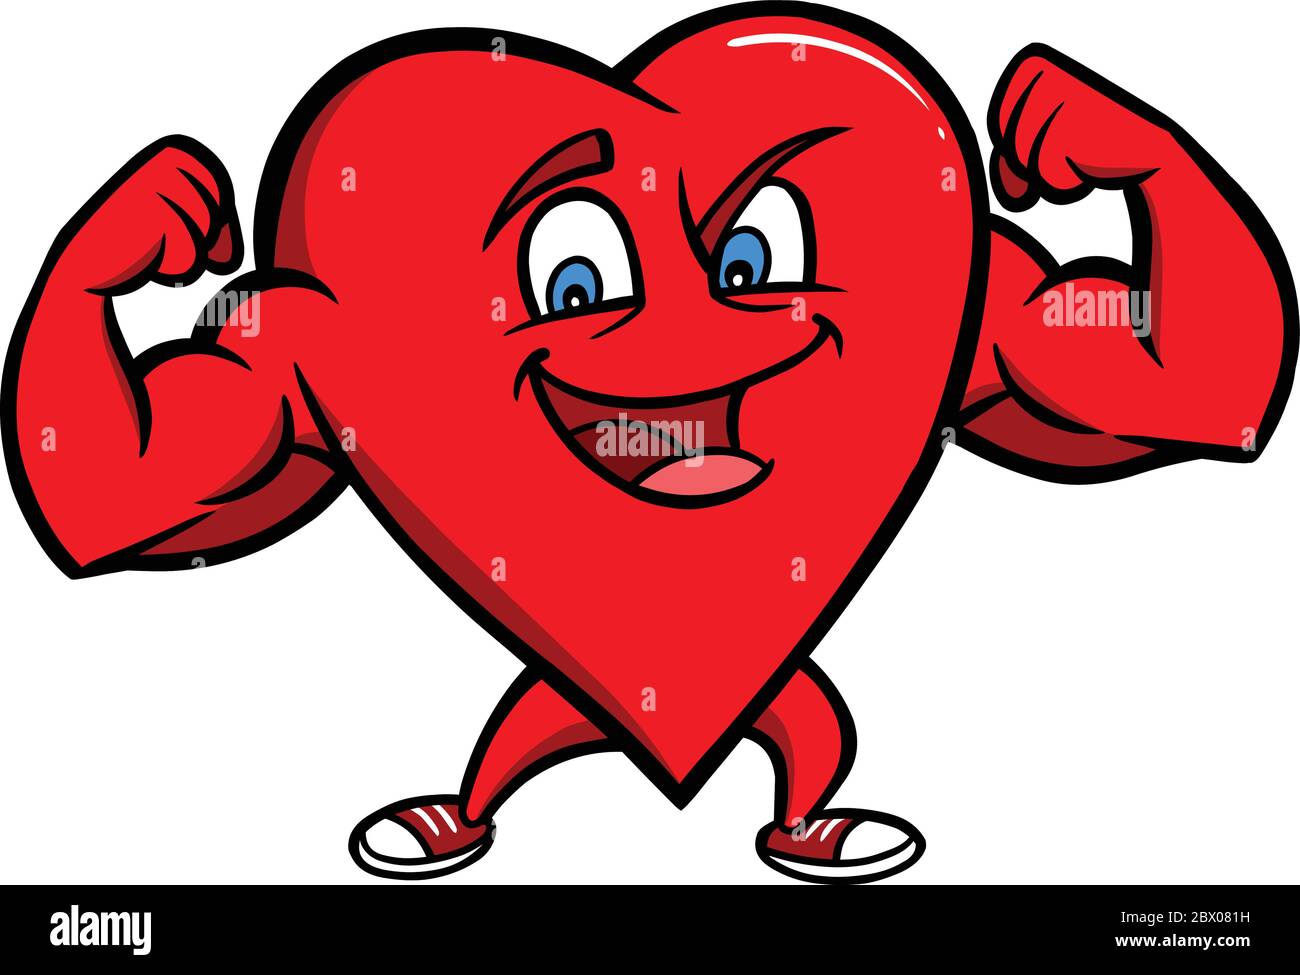 Strong Heart Character - A cartoon illustration of a Strong Heart Mascot Character. Stock Vector